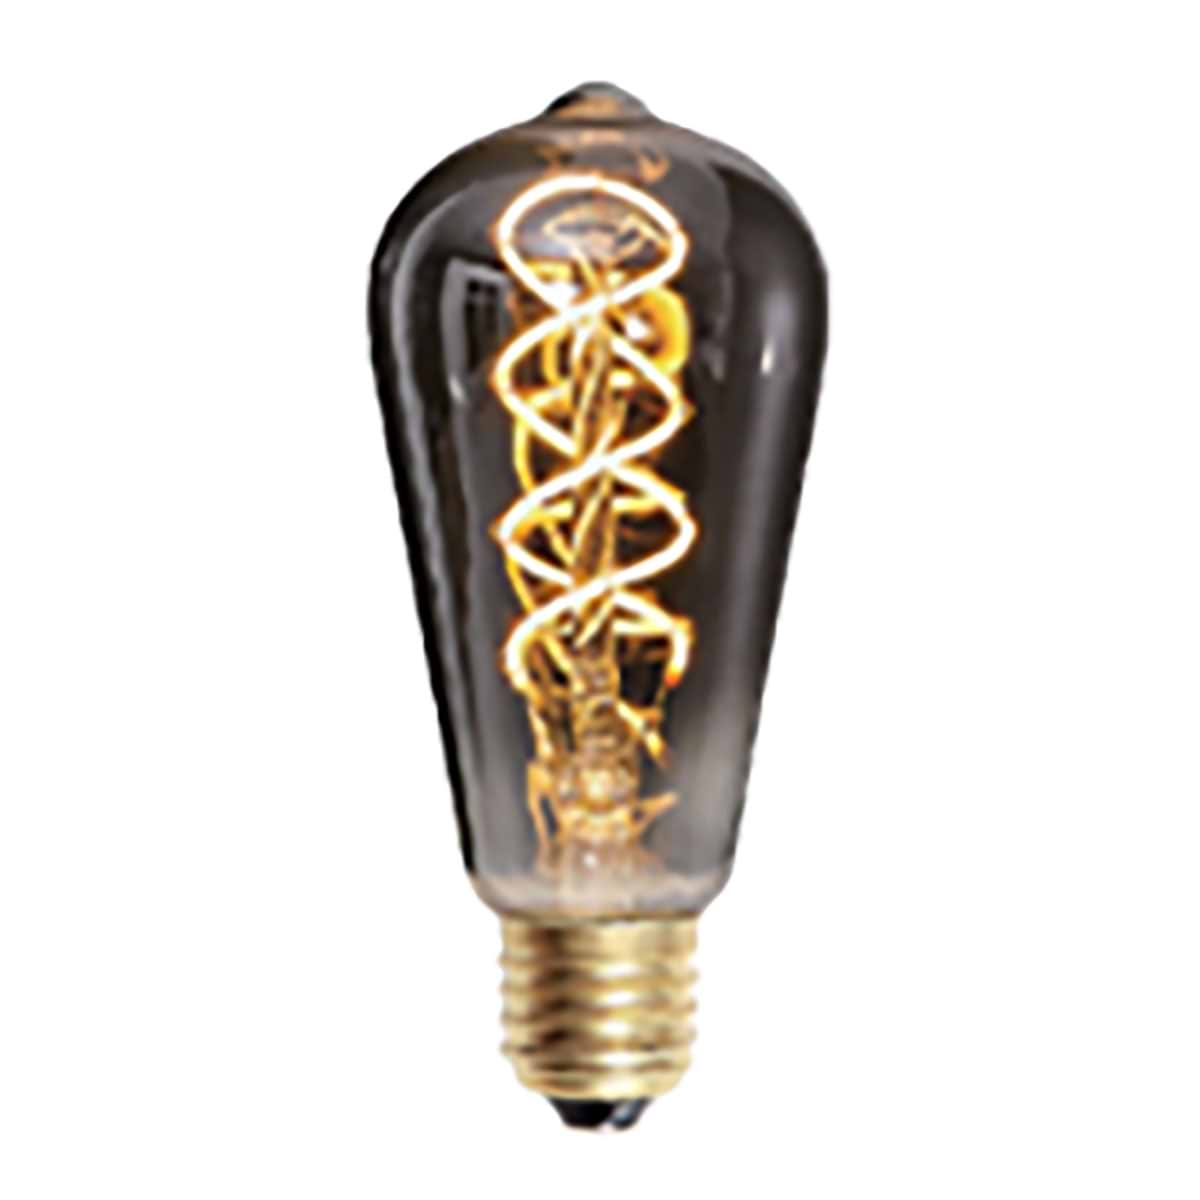 schuif gemeenschap Pakistaans LED lamp 9W DIM Edison spiraal, E27 fitting, 9 Watt, dimbaar, Smoke.  Duurzaam, decoratief en dimbaar. HIGH LIGHT - L262119 - Webo Verlichting